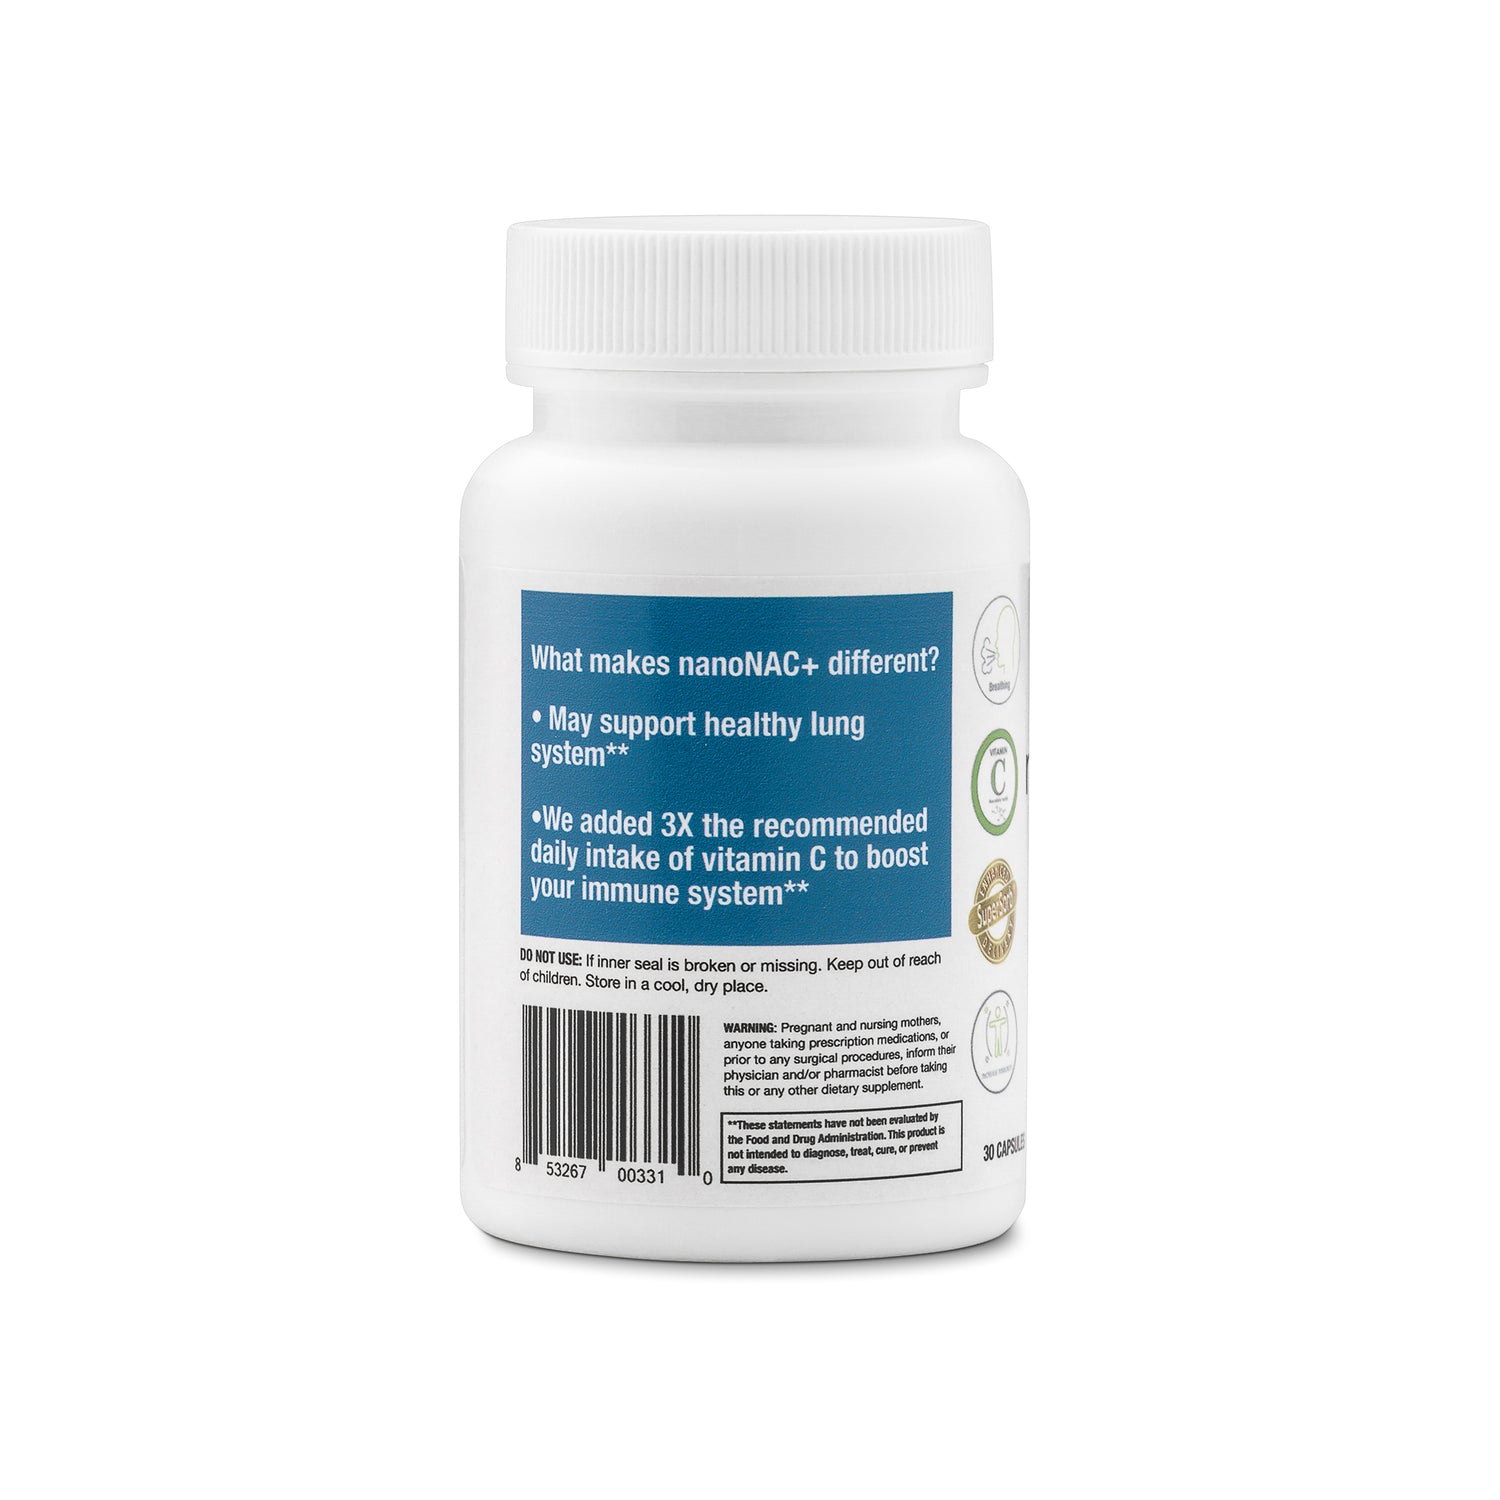 nanoNAC+ NAC n-acetyl-l-cysteine with vitamin c immunity supplement capsule - health benefits